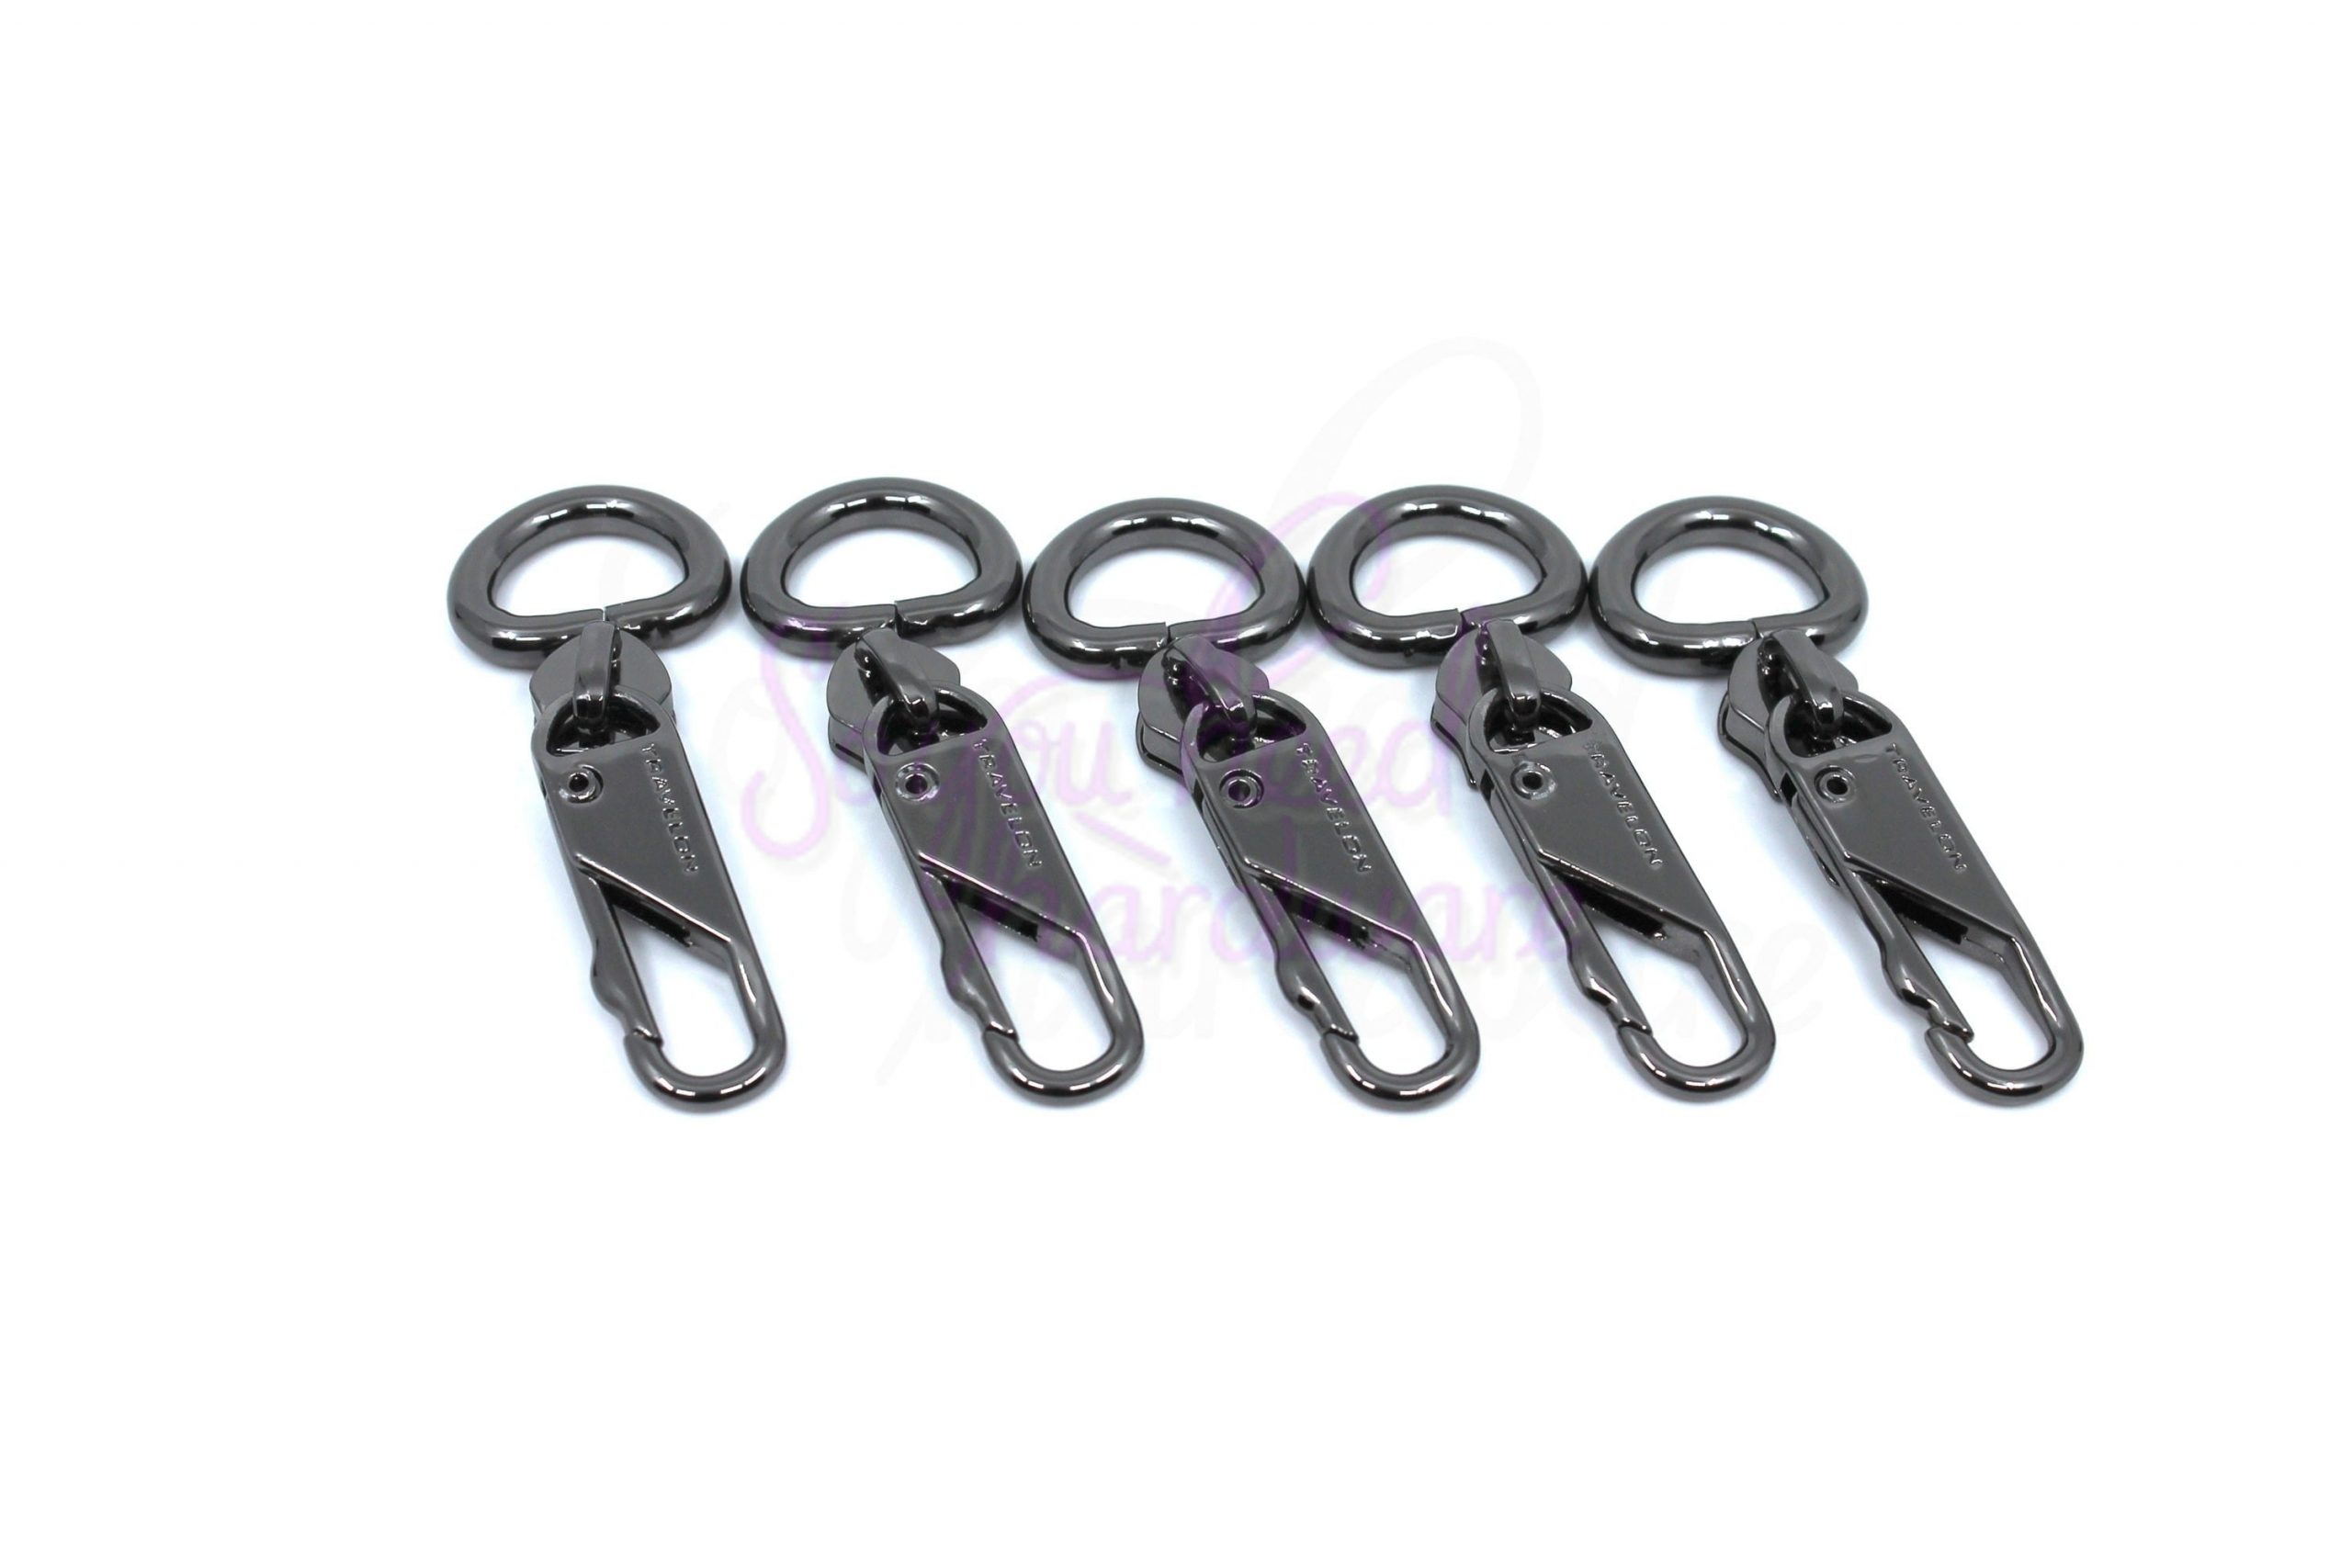 5 Long Square Nylon Zipper Pulls - Set of 5 - So You Need Hardware